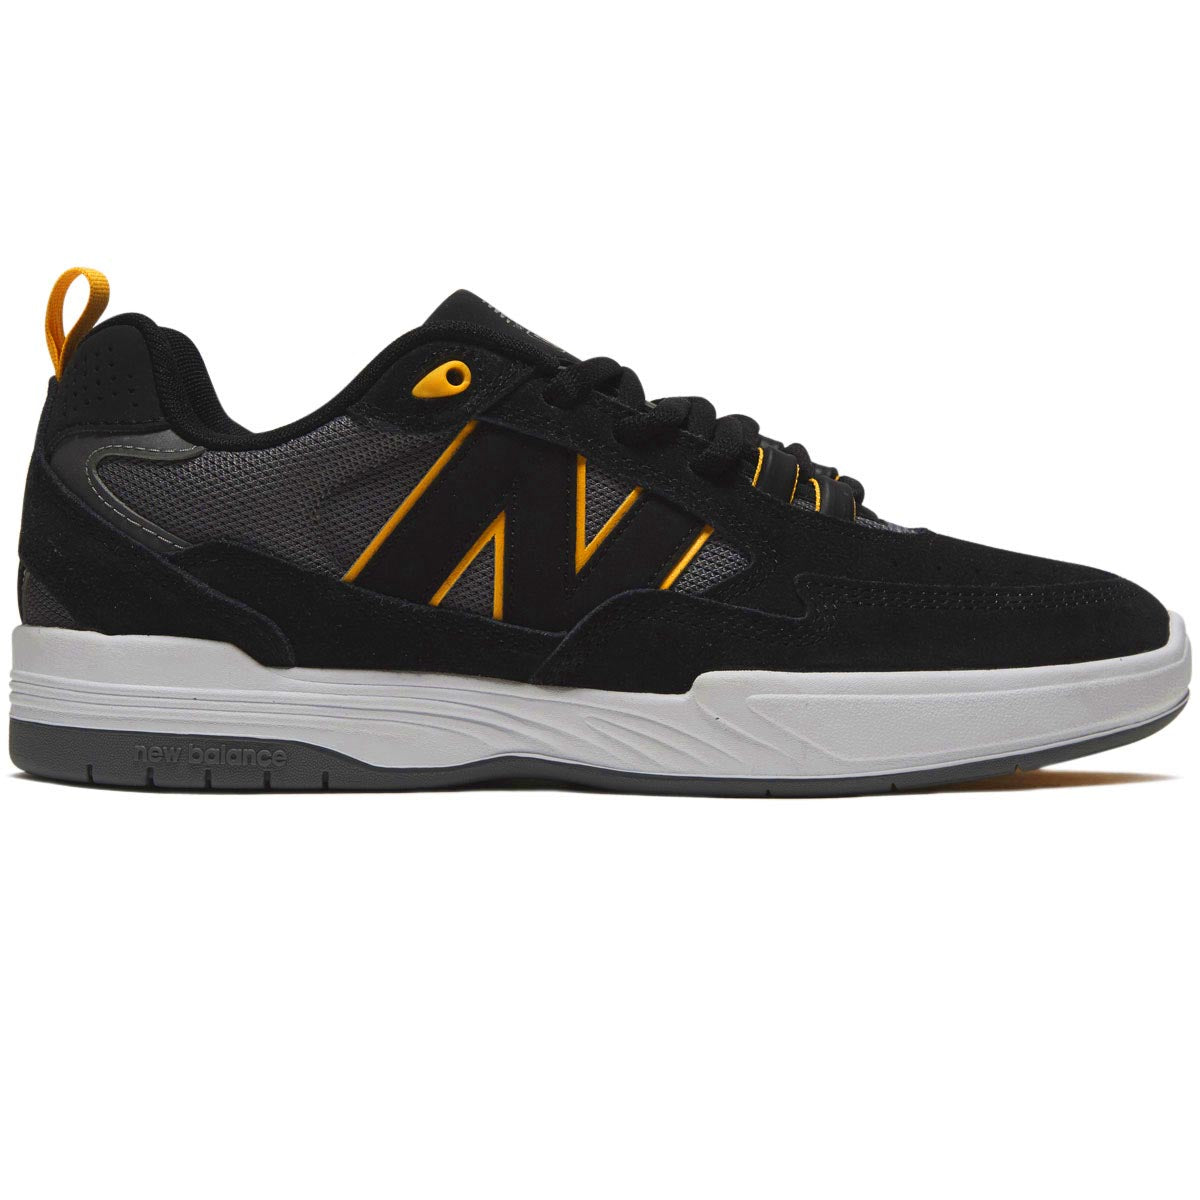 New Balance 808 Tiago Shoes - Black/Yellow image 1